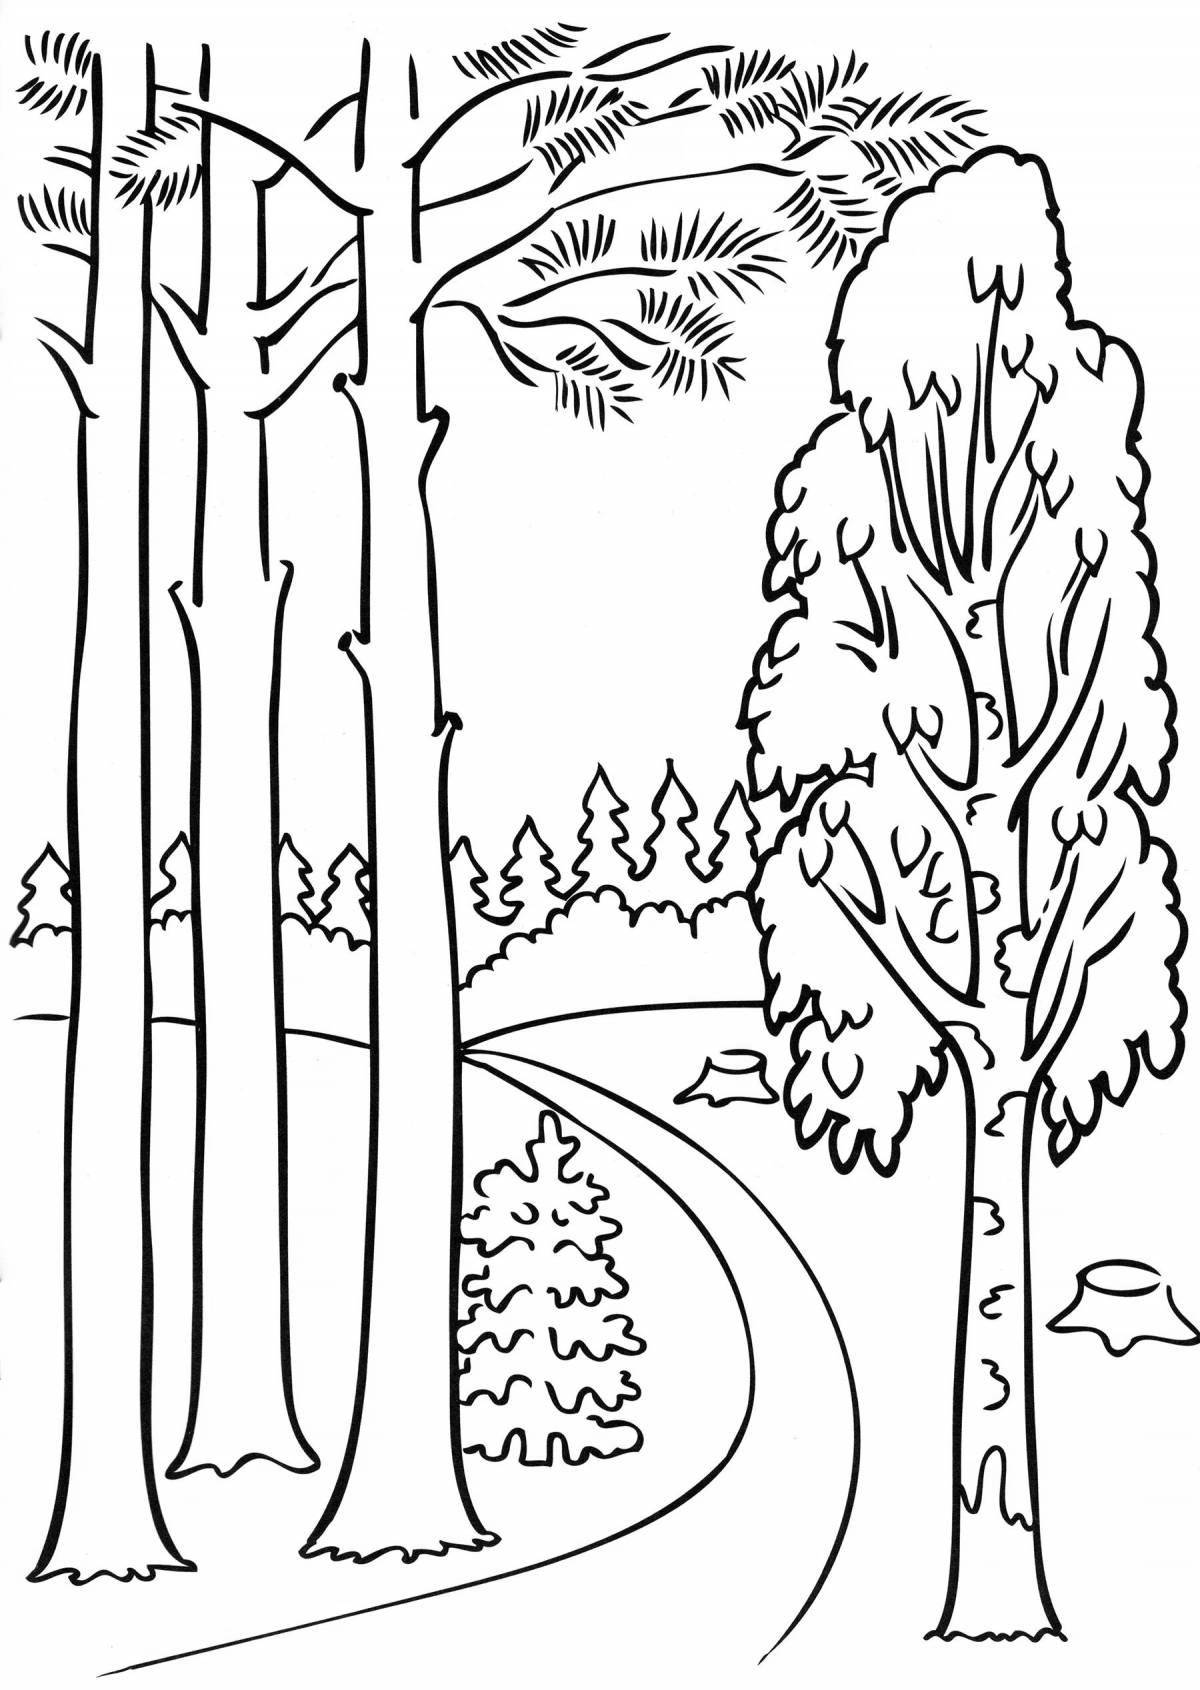 Joyful birch grove coloring book for children